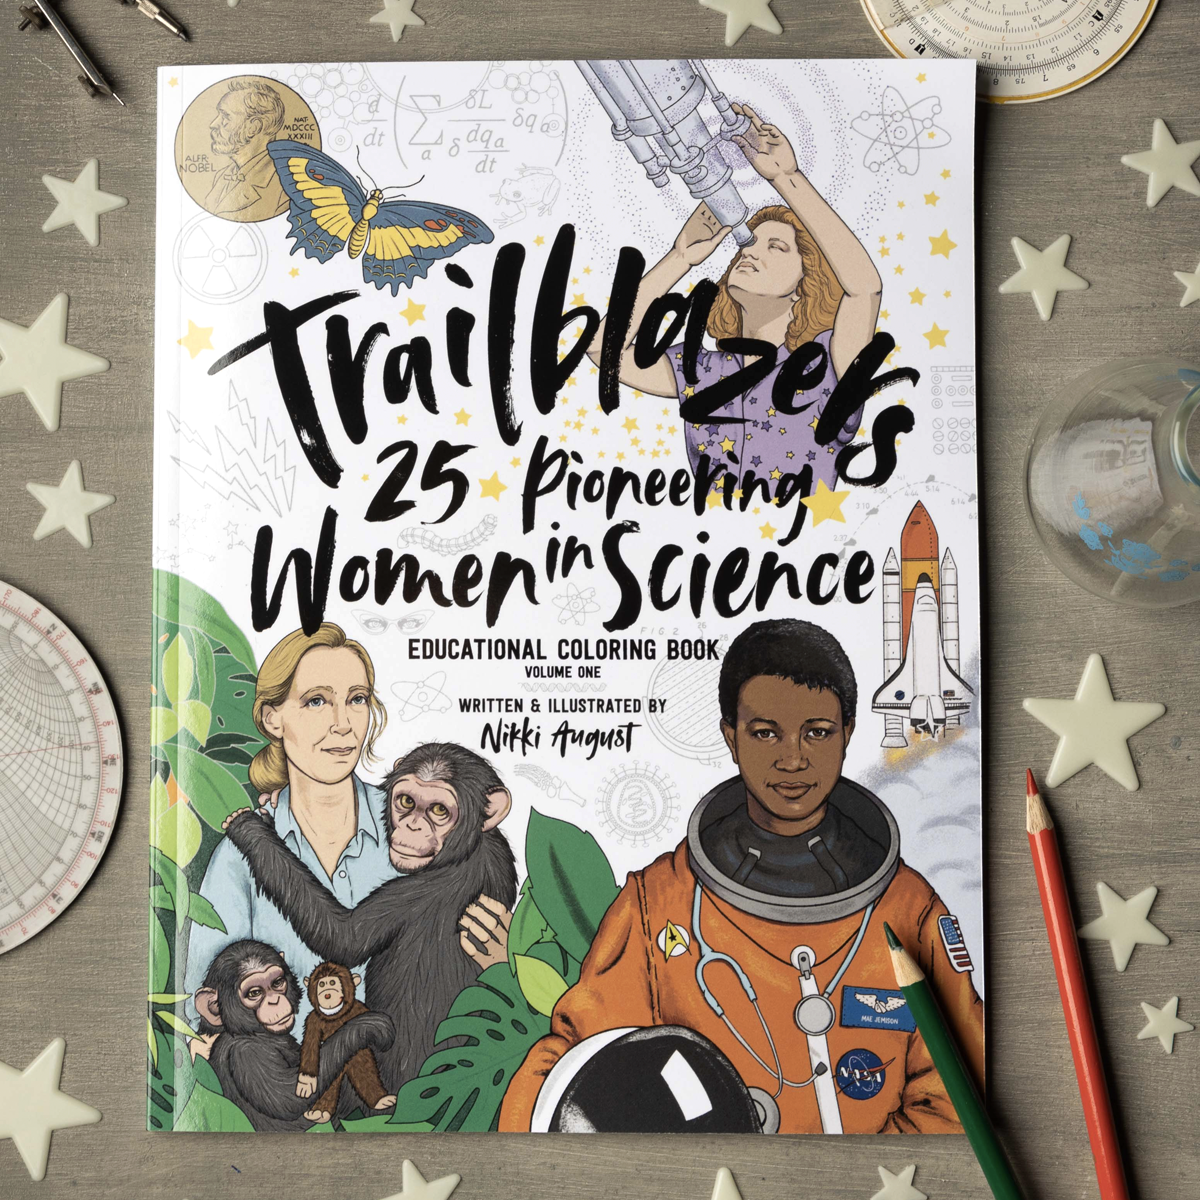 Trailblazers, Women in Science Educational Coloring Book